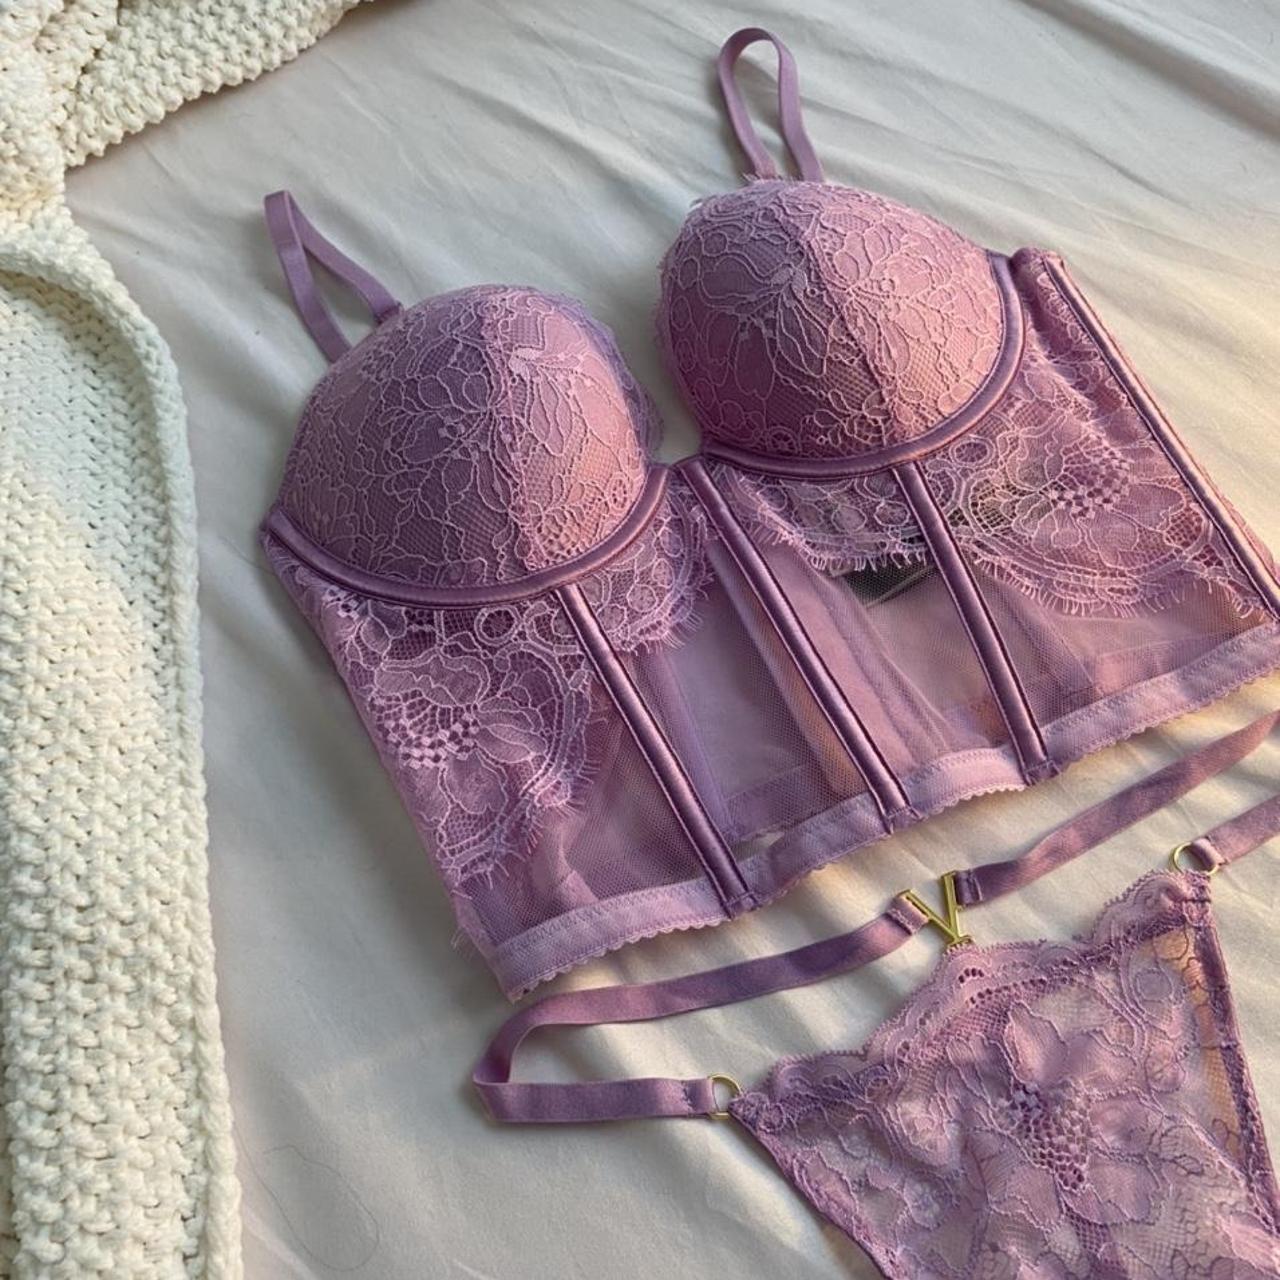 Stunning Purple Victoria's Secret Bra - Size 32C